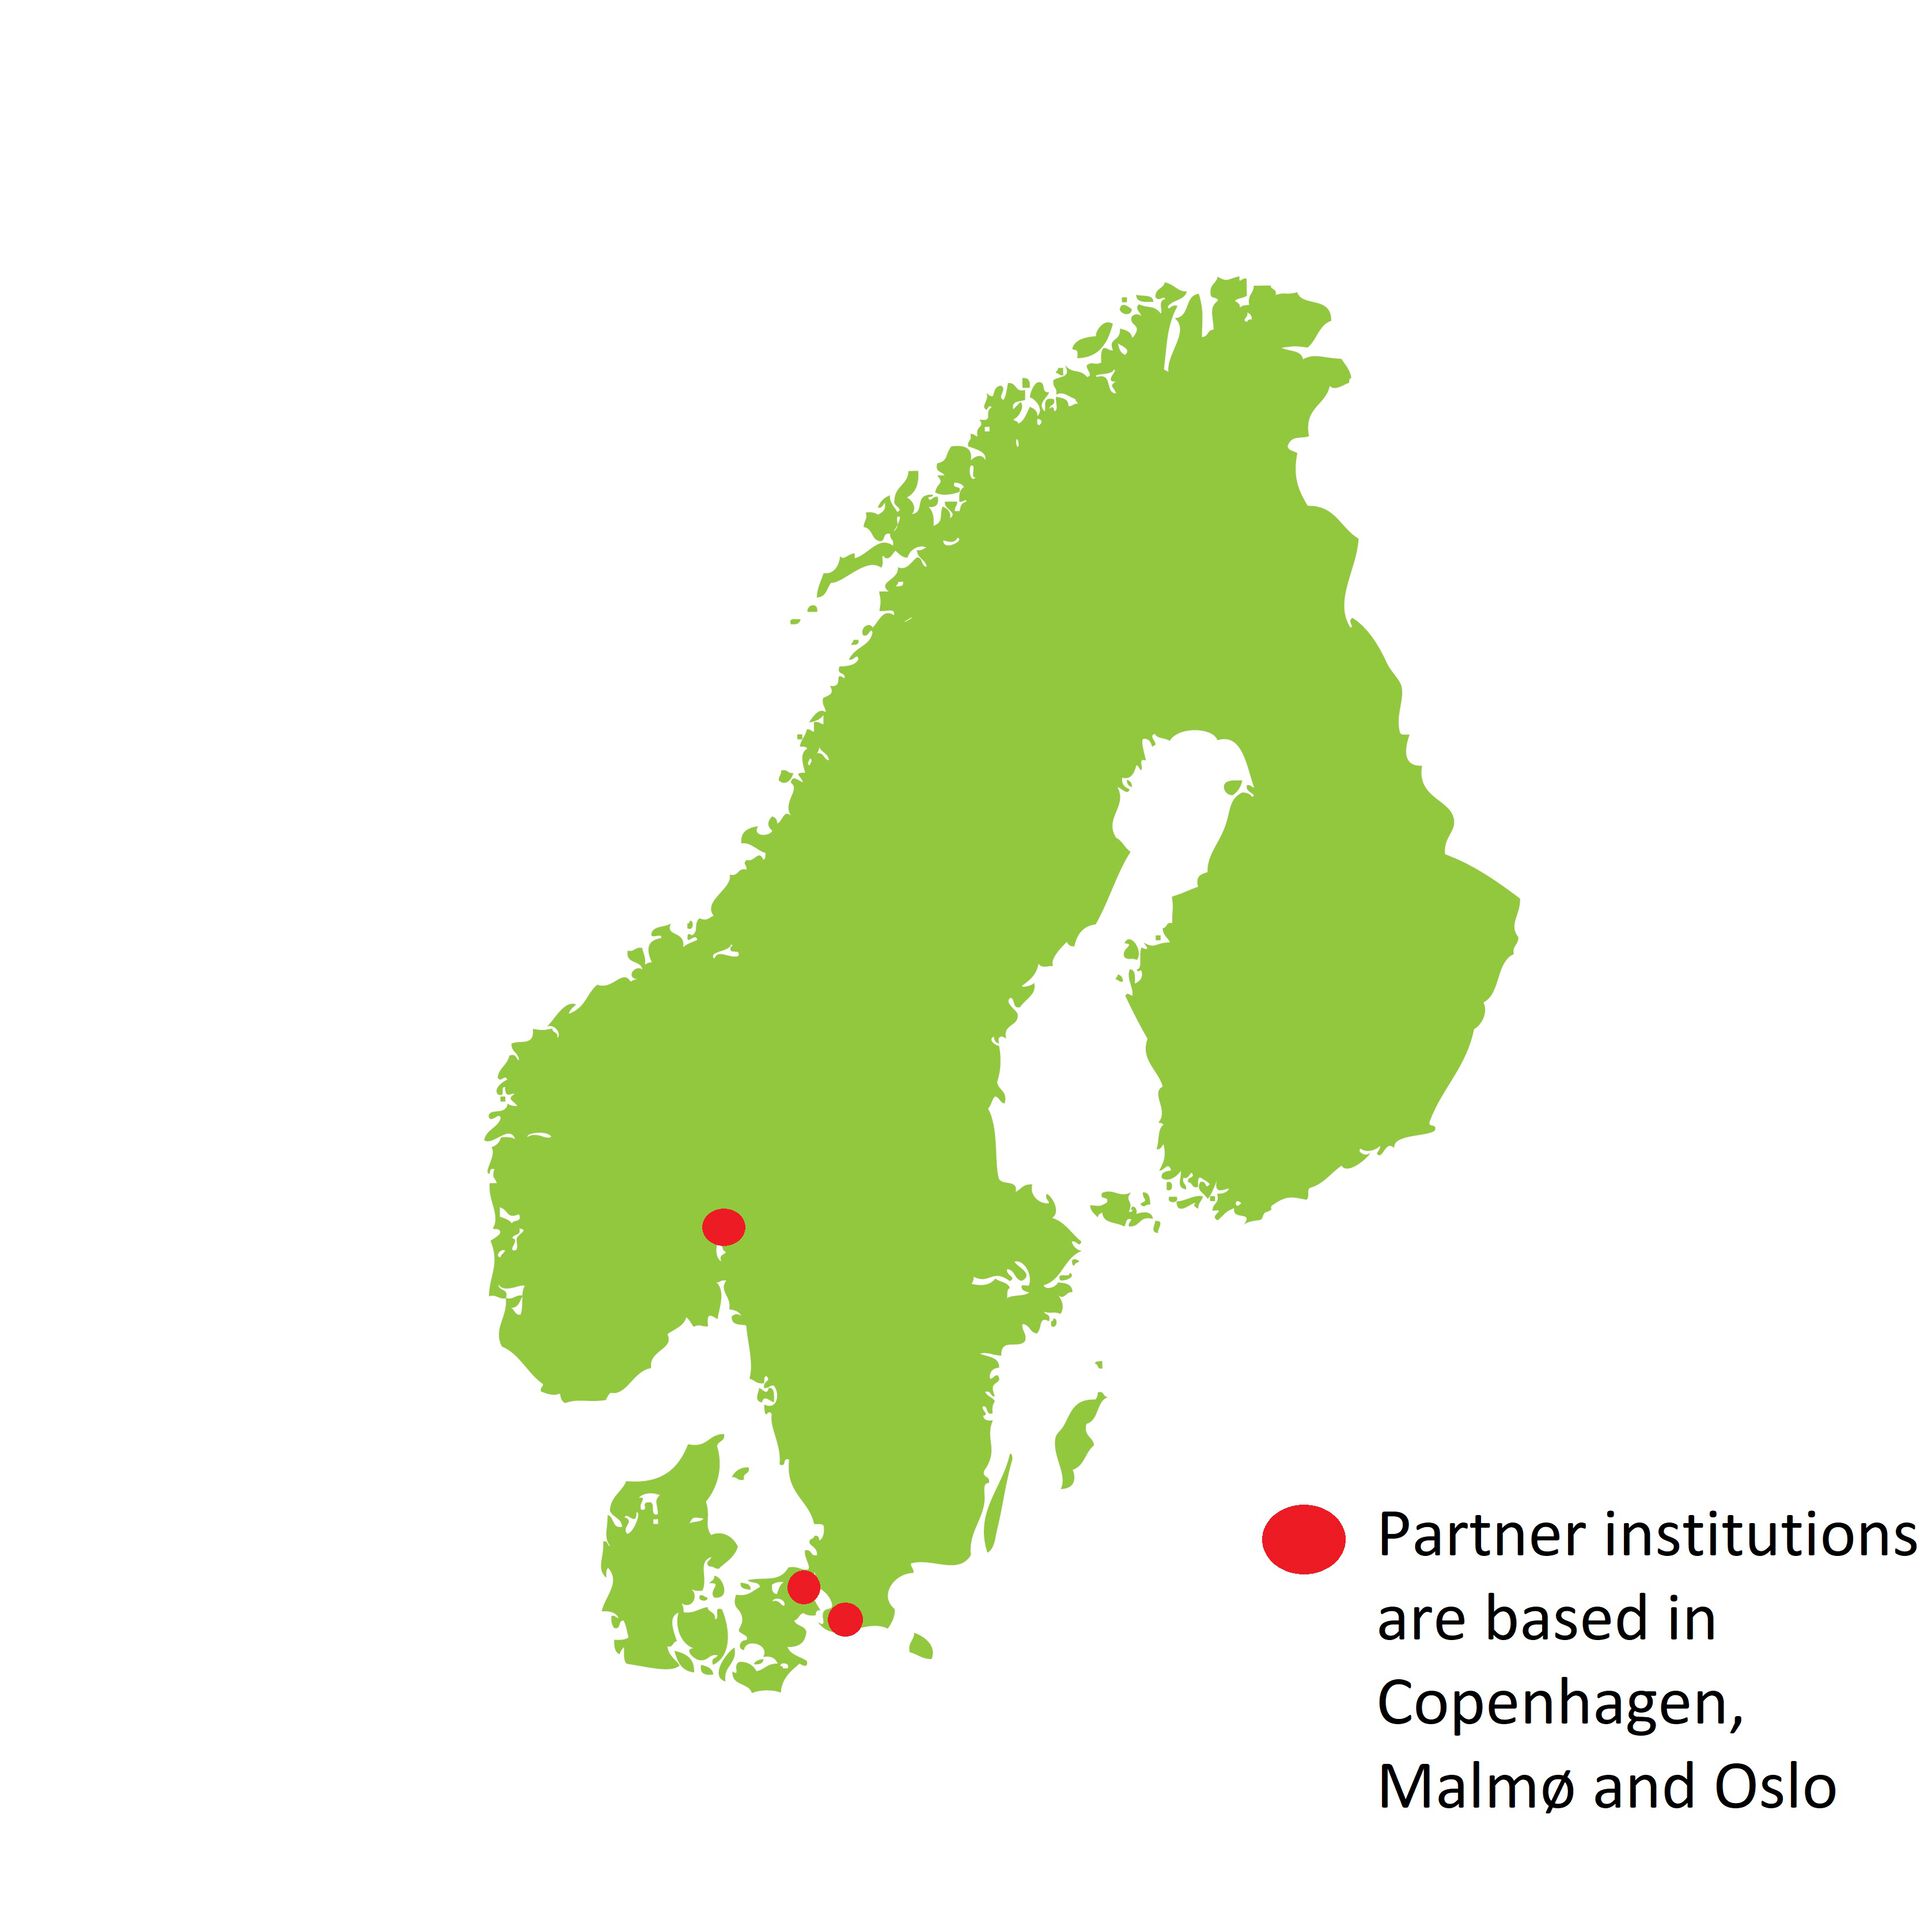 Partner institutions are based in Copenhagen, Malmø and Oslo